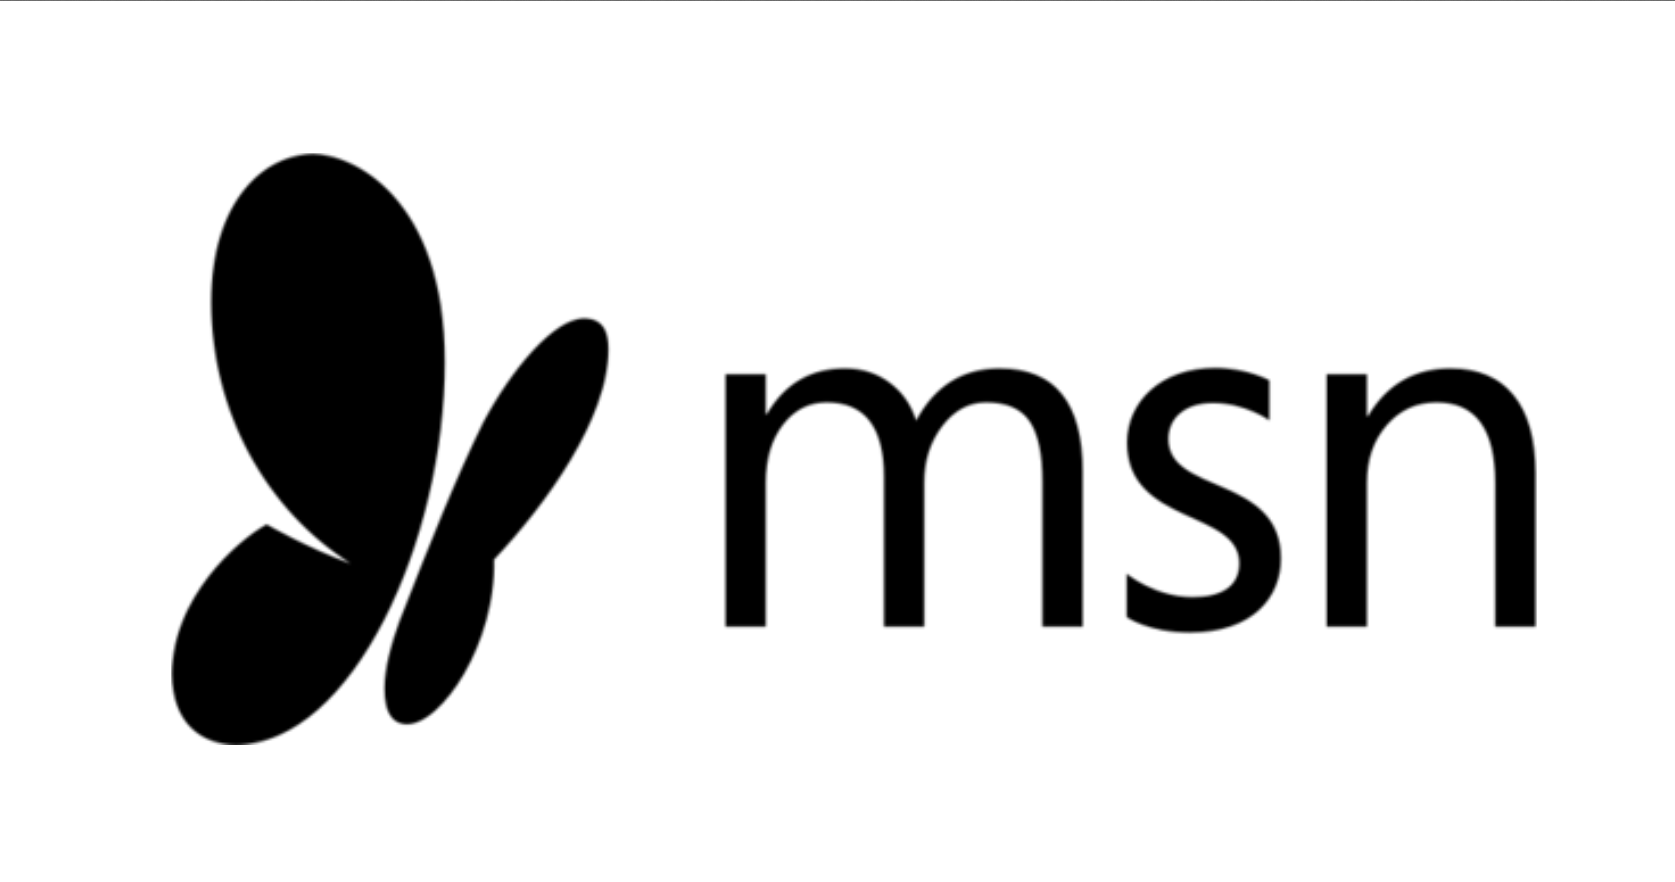 Http msn. Msn. Логотип. МСН логотип. Поисковая система msn.